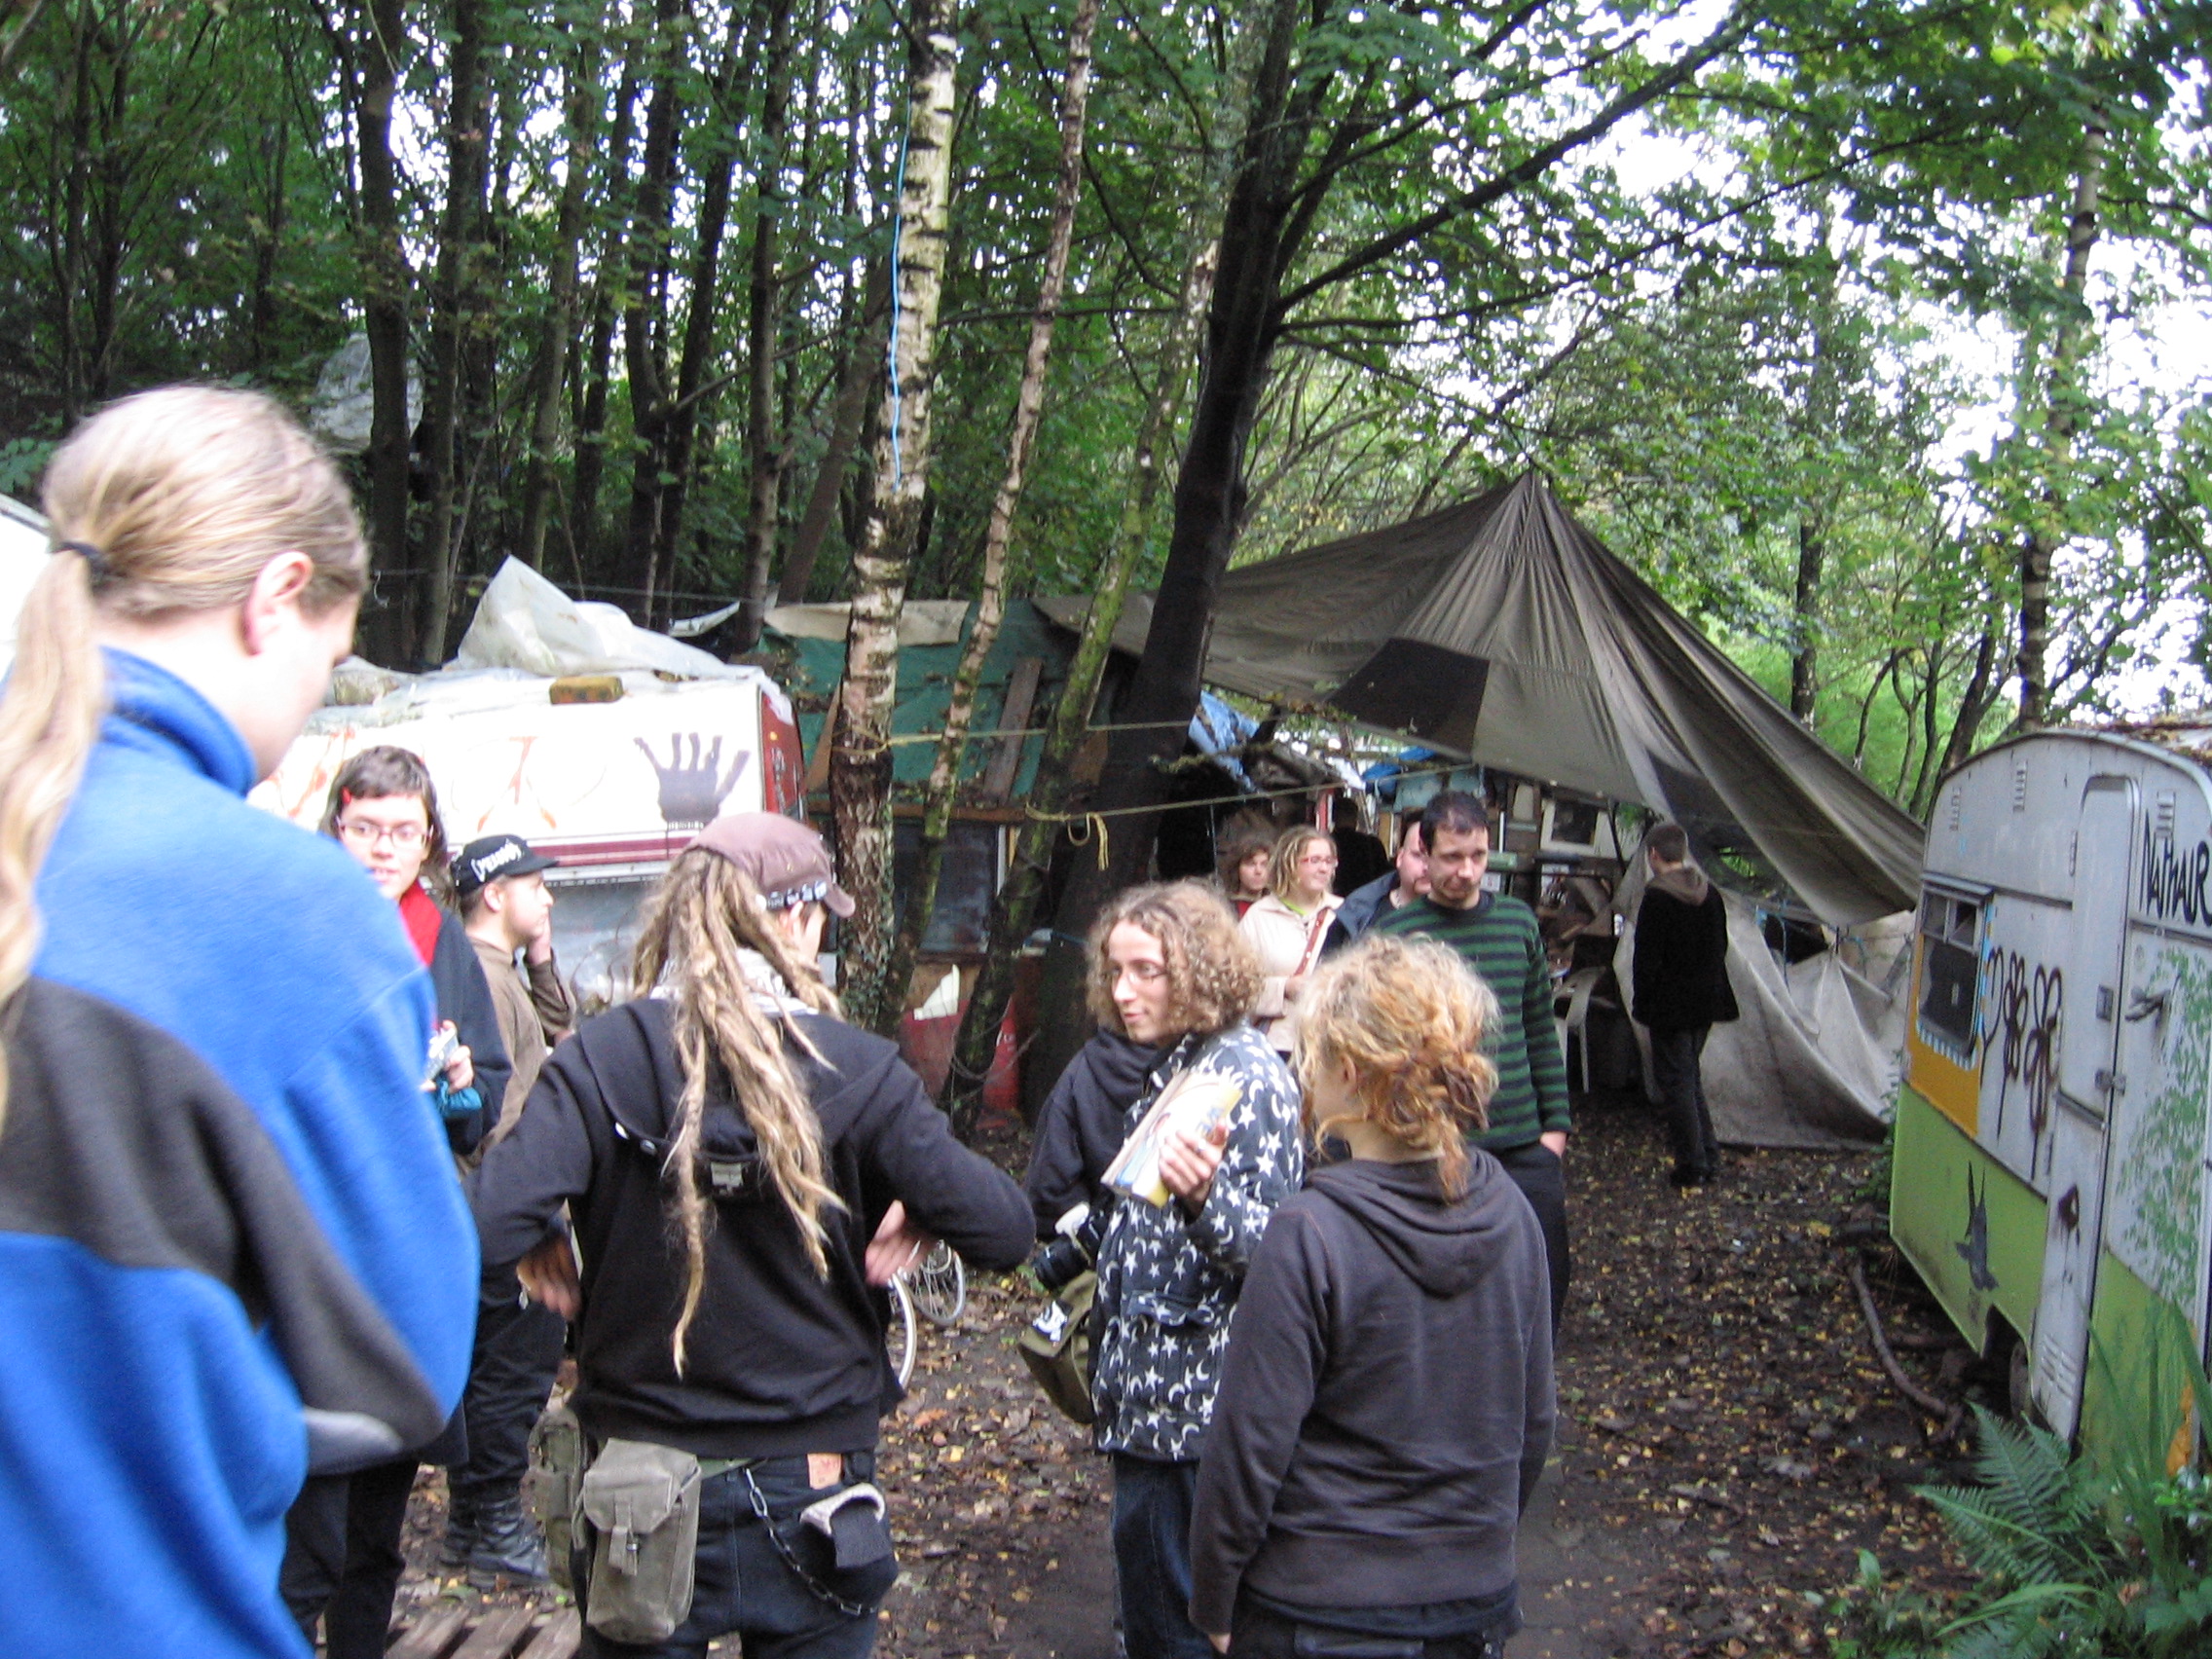 Faslane Peace Camp